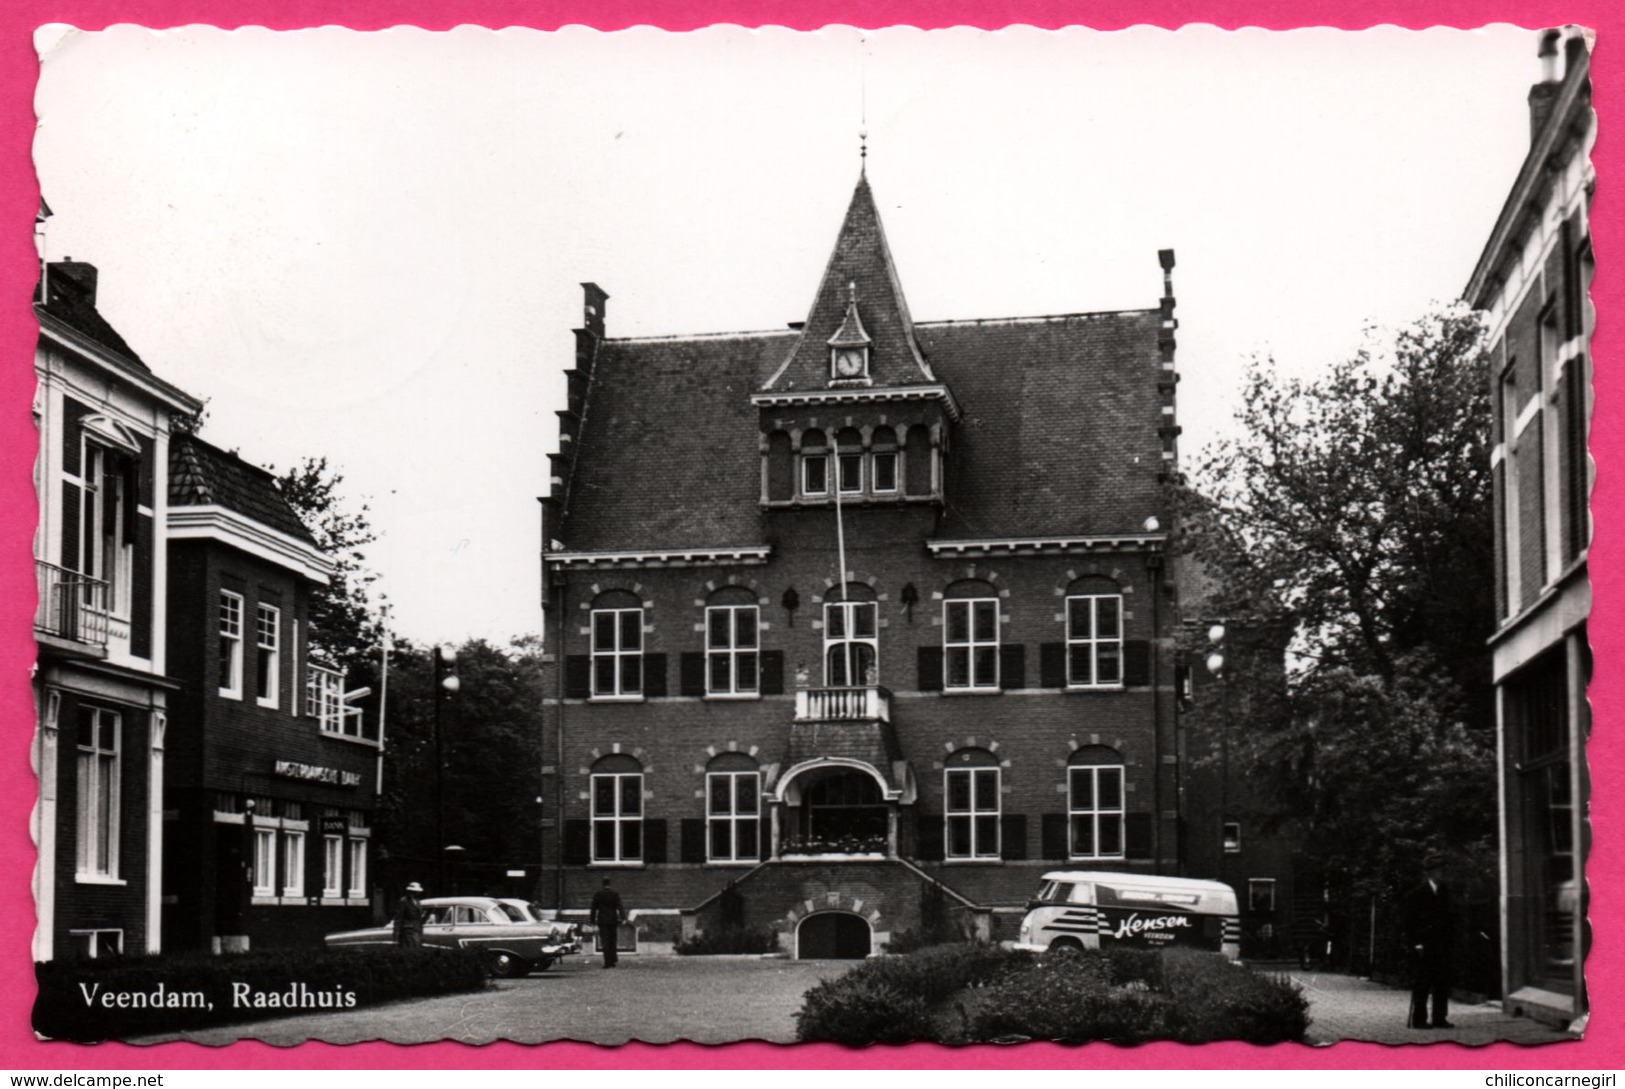 Veendam - Raadhuis - Vieilles Voitures - Camionnette Publicité Magasin HENSEN - Animée - 1967 - Veendam